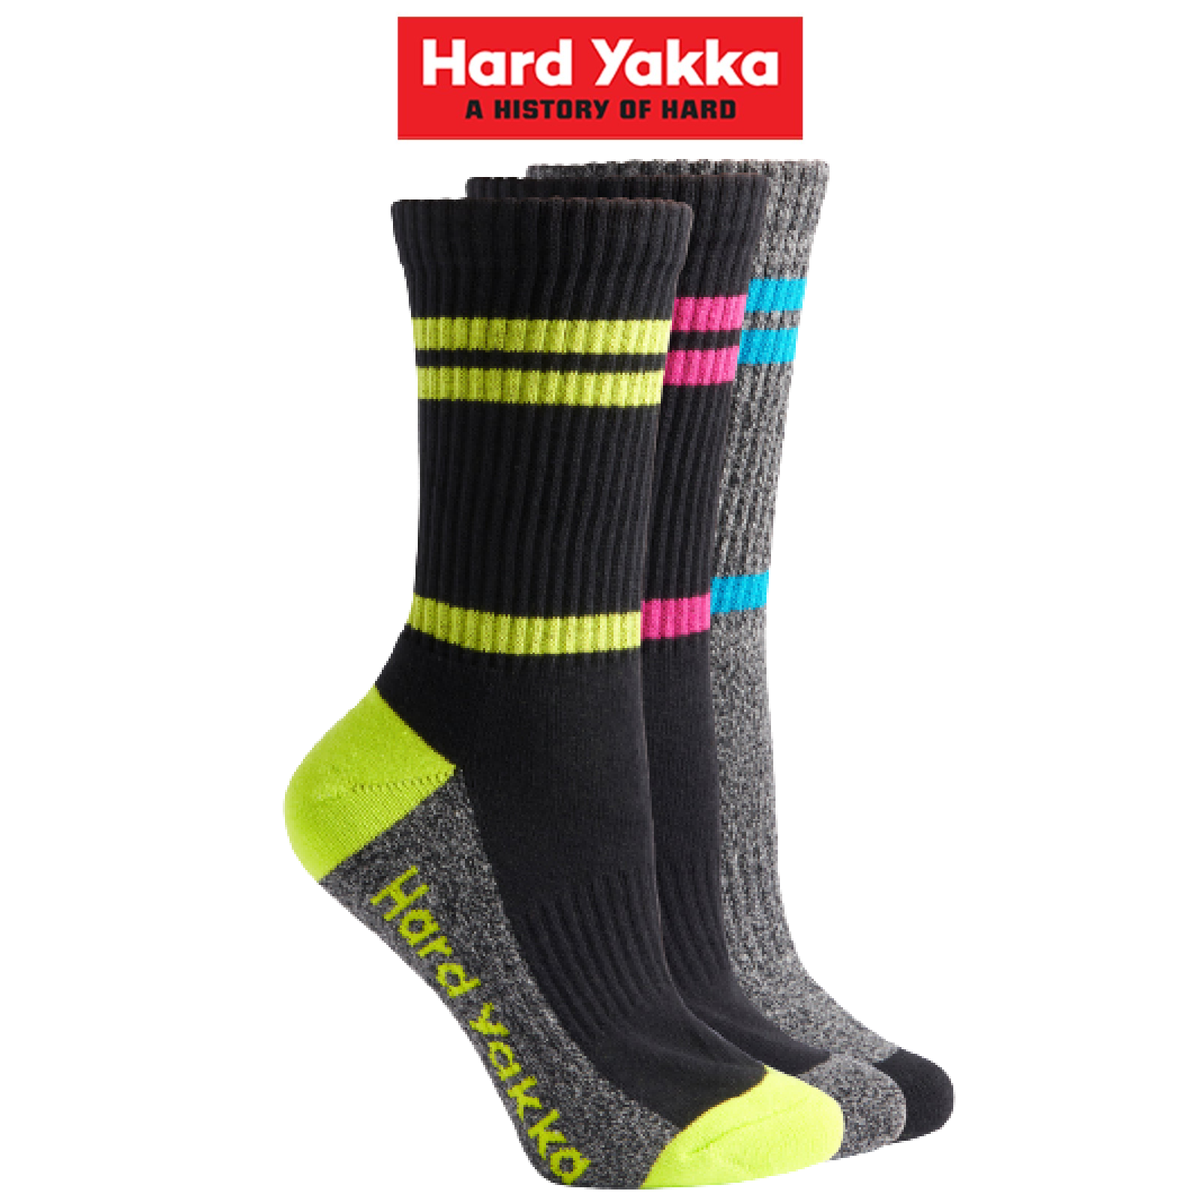 Hard Yakka Womens Crew 3 Pack Work Socks Multi Colored Cotton Comfort Y20120